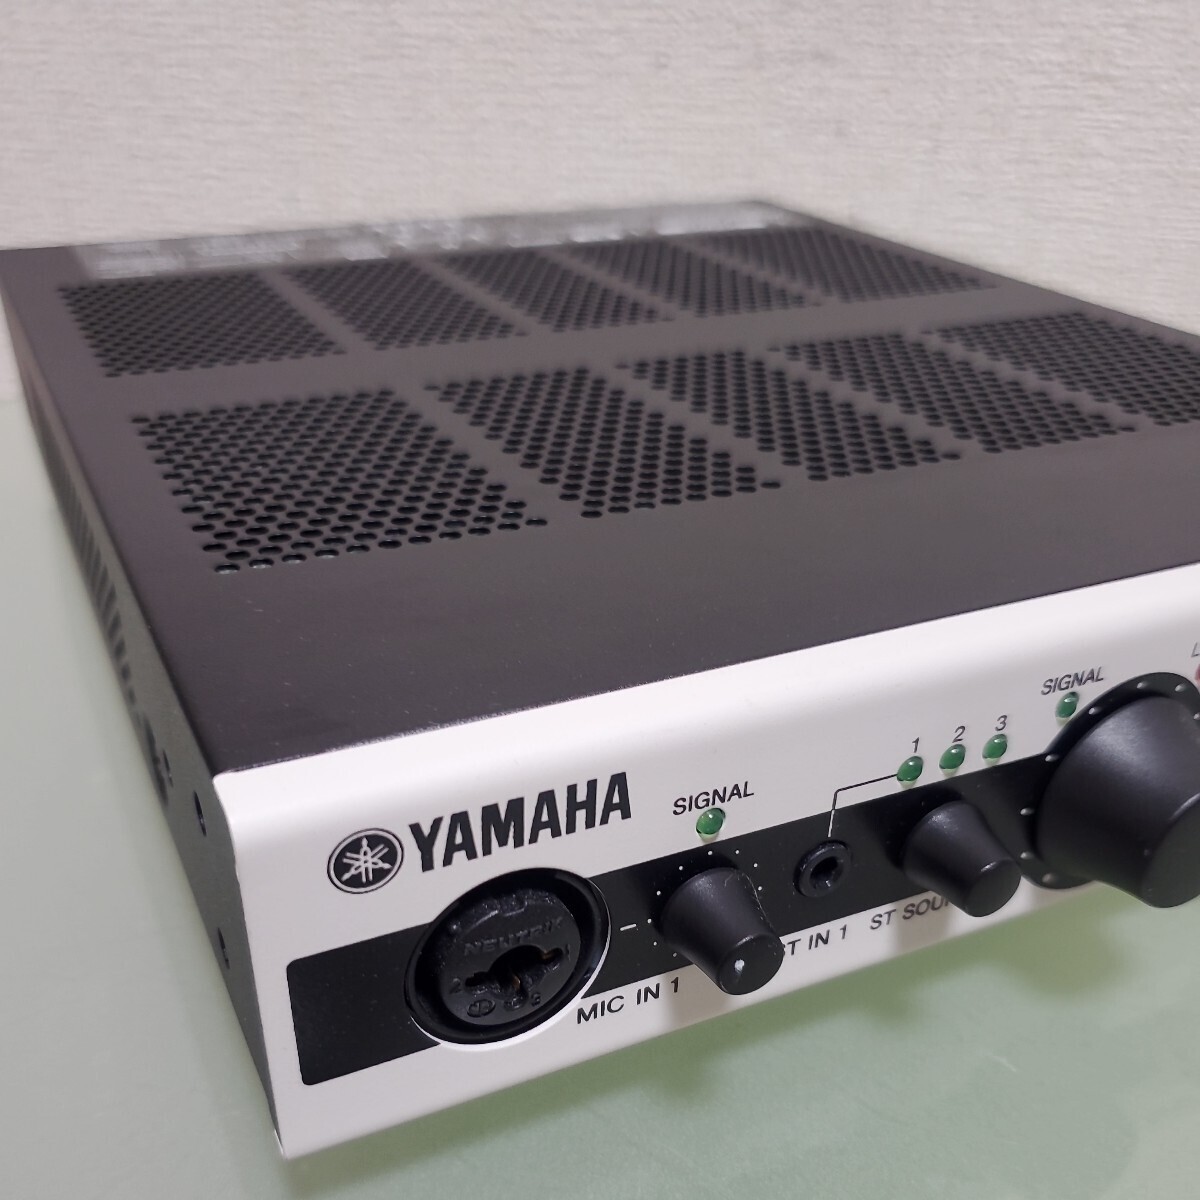 YAMAHA ヤマハ パワーアンプ パワーアンプリファイアー MA2030a 通電確認済み POMER AMPLIFIER_画像3